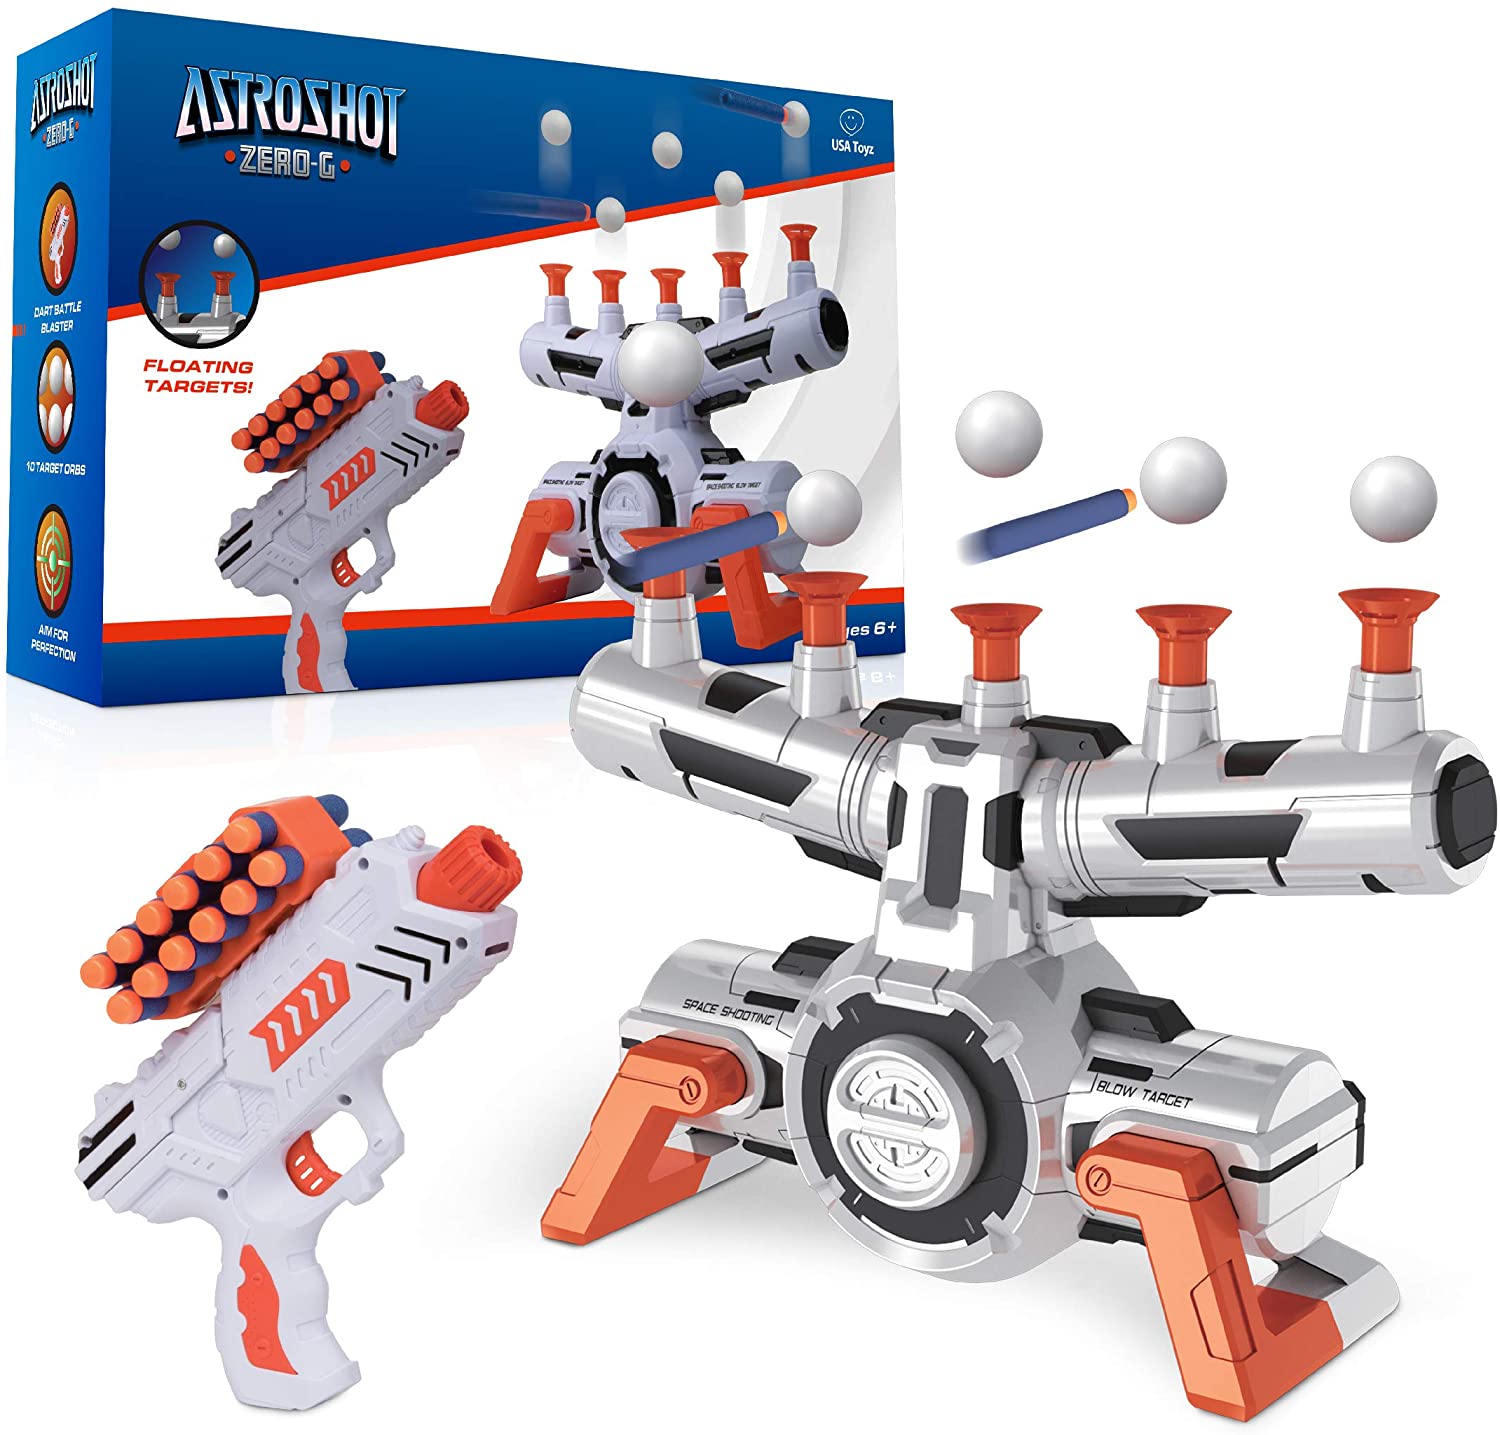 USA Toyz AstroShot Target Practice & Toy Blaster For Kids